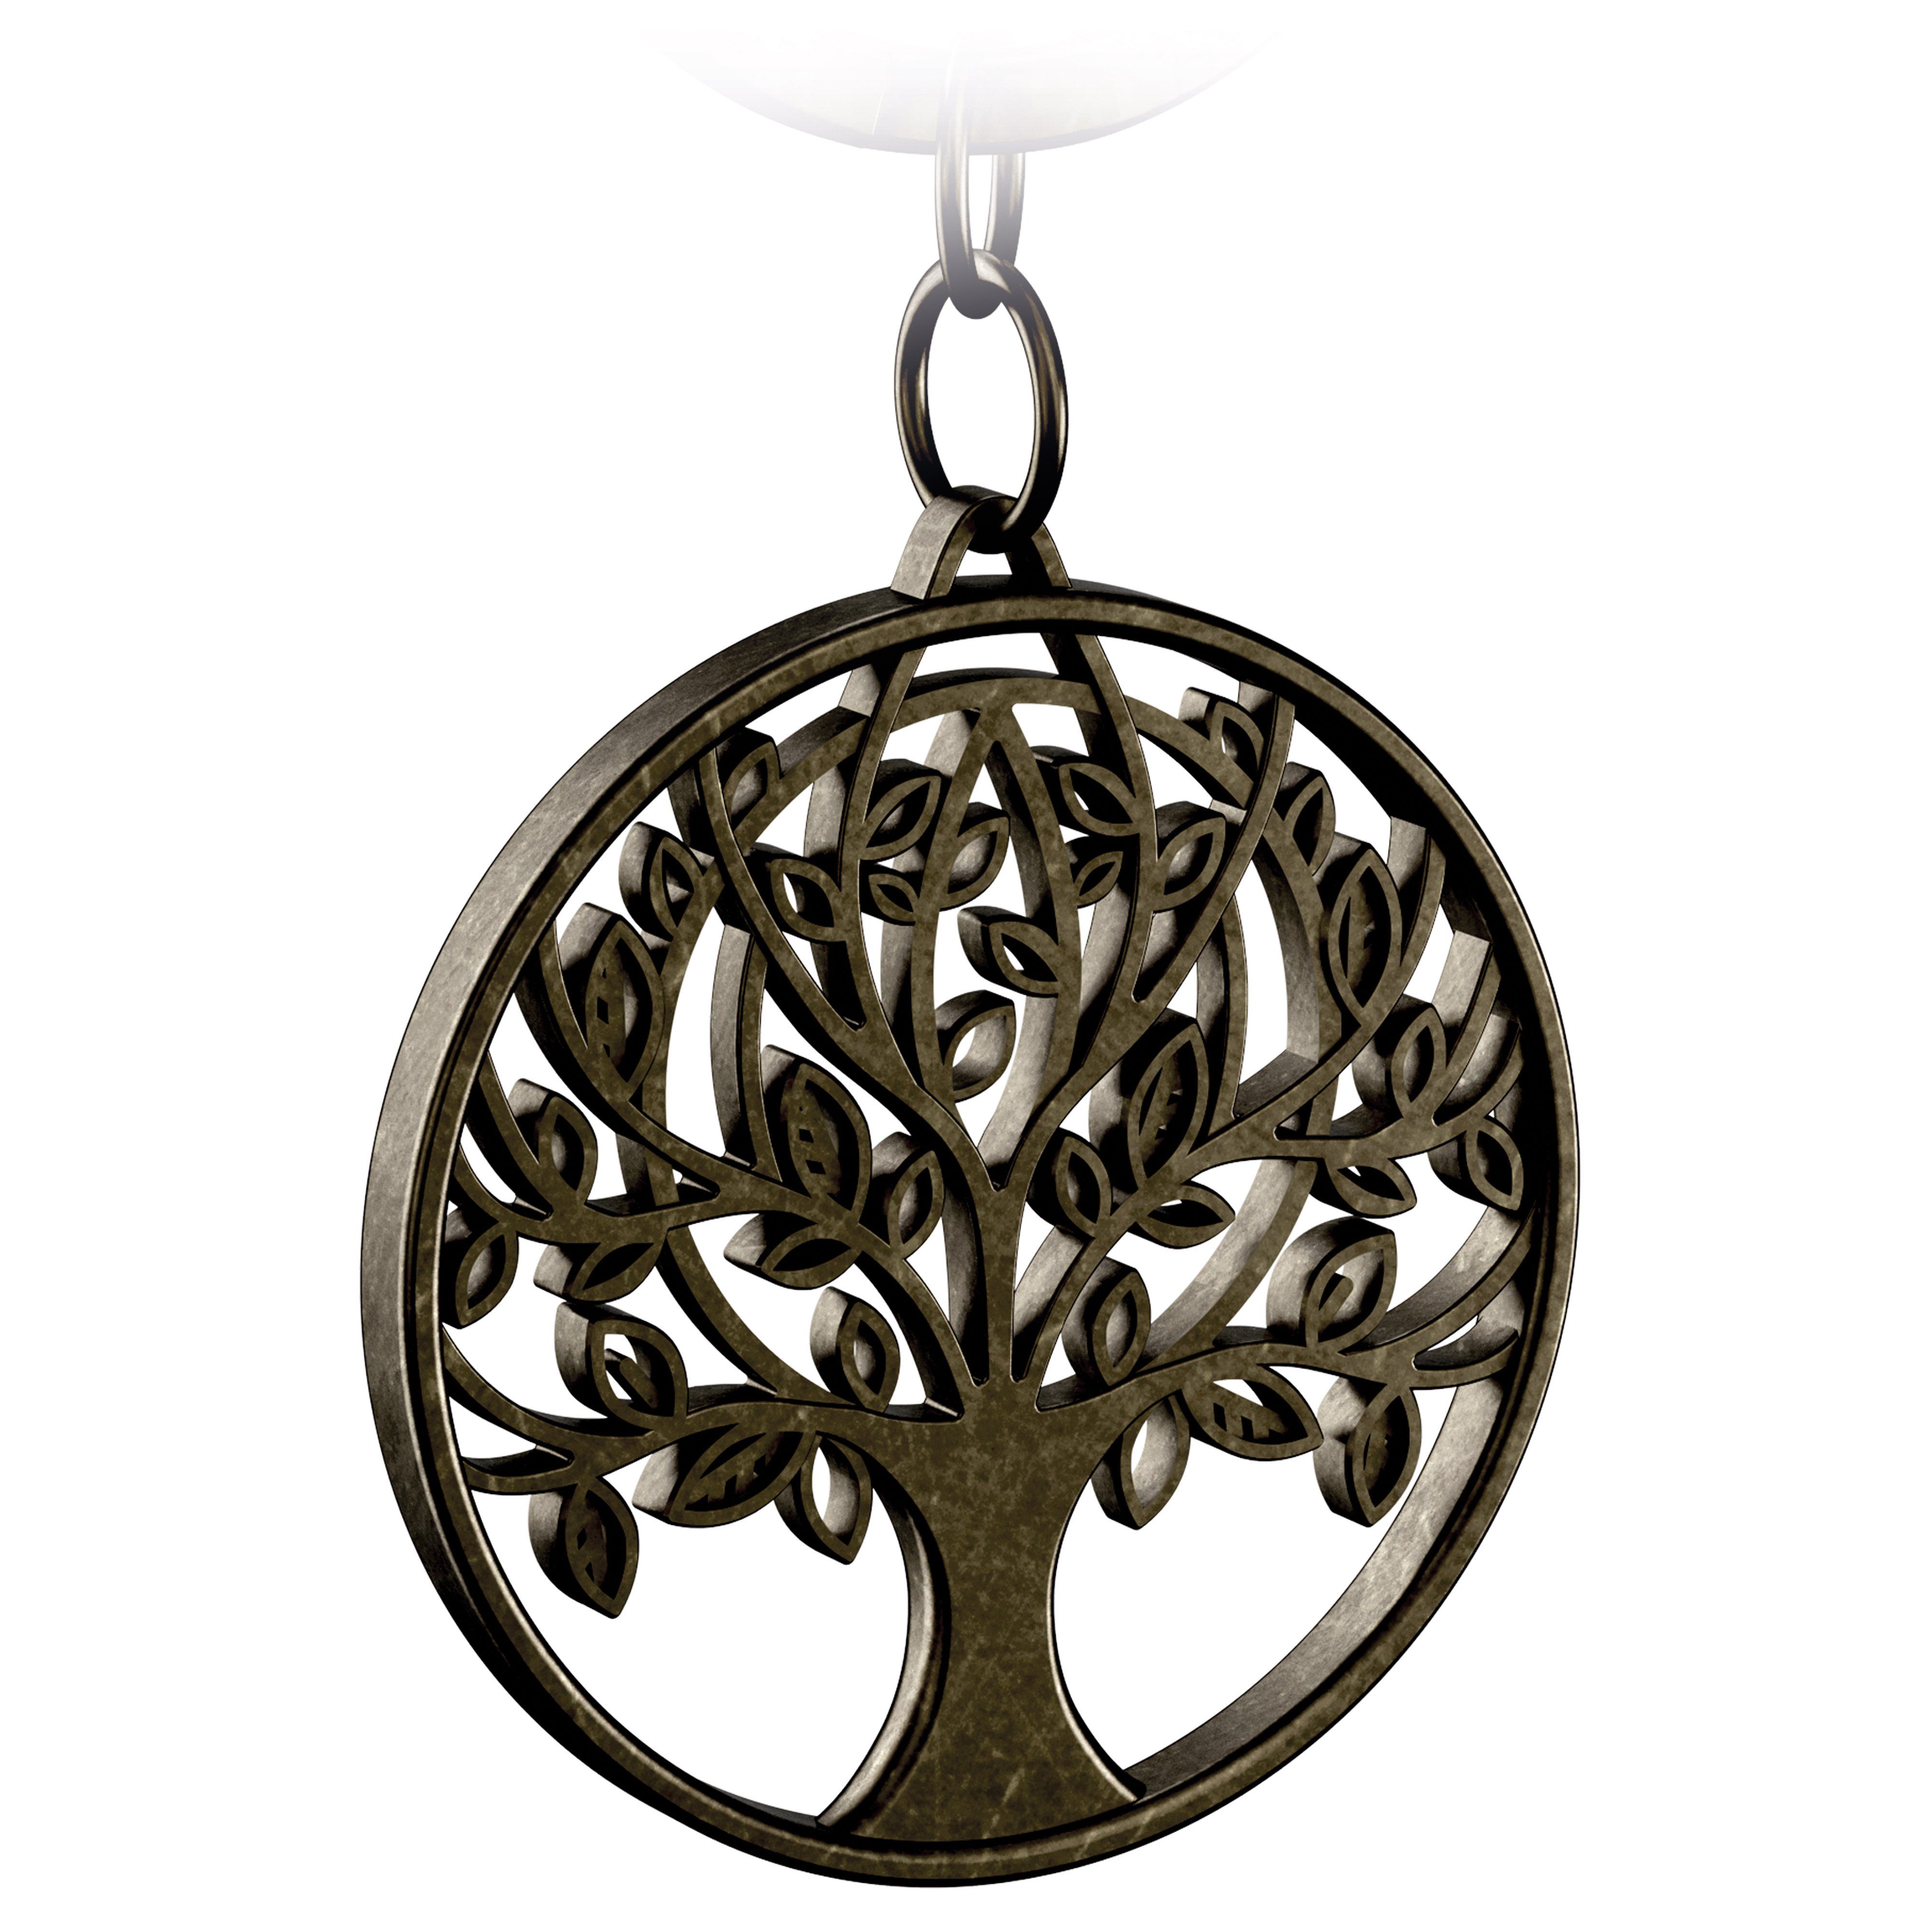 FABACH Schlüsselanhänger Lebensbaum "Autumn" - Baum des Lebens Anhänger als Glücksbringer Antique Bronze